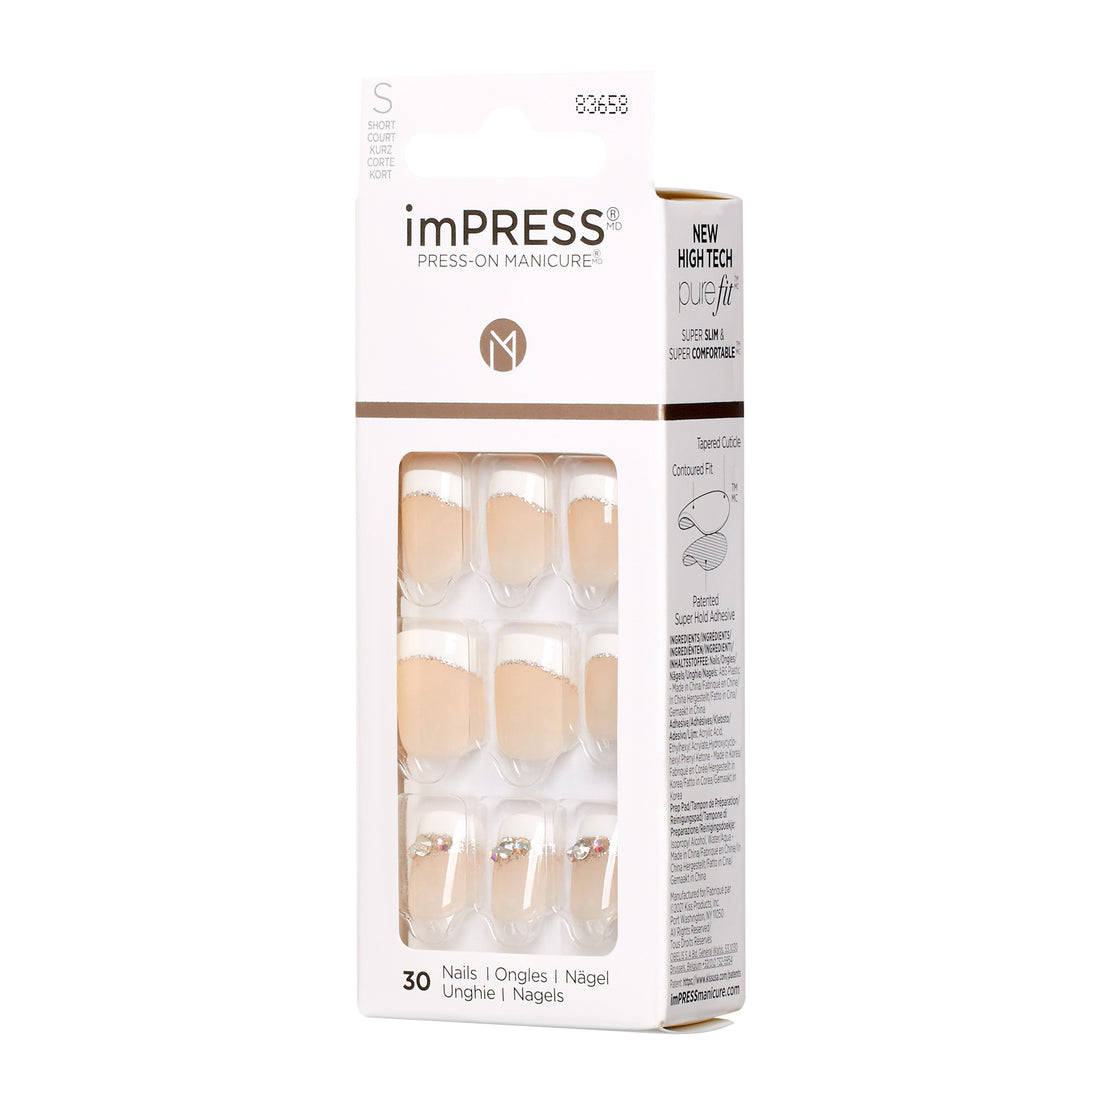 imPRESS Press-On Manicure - Believe